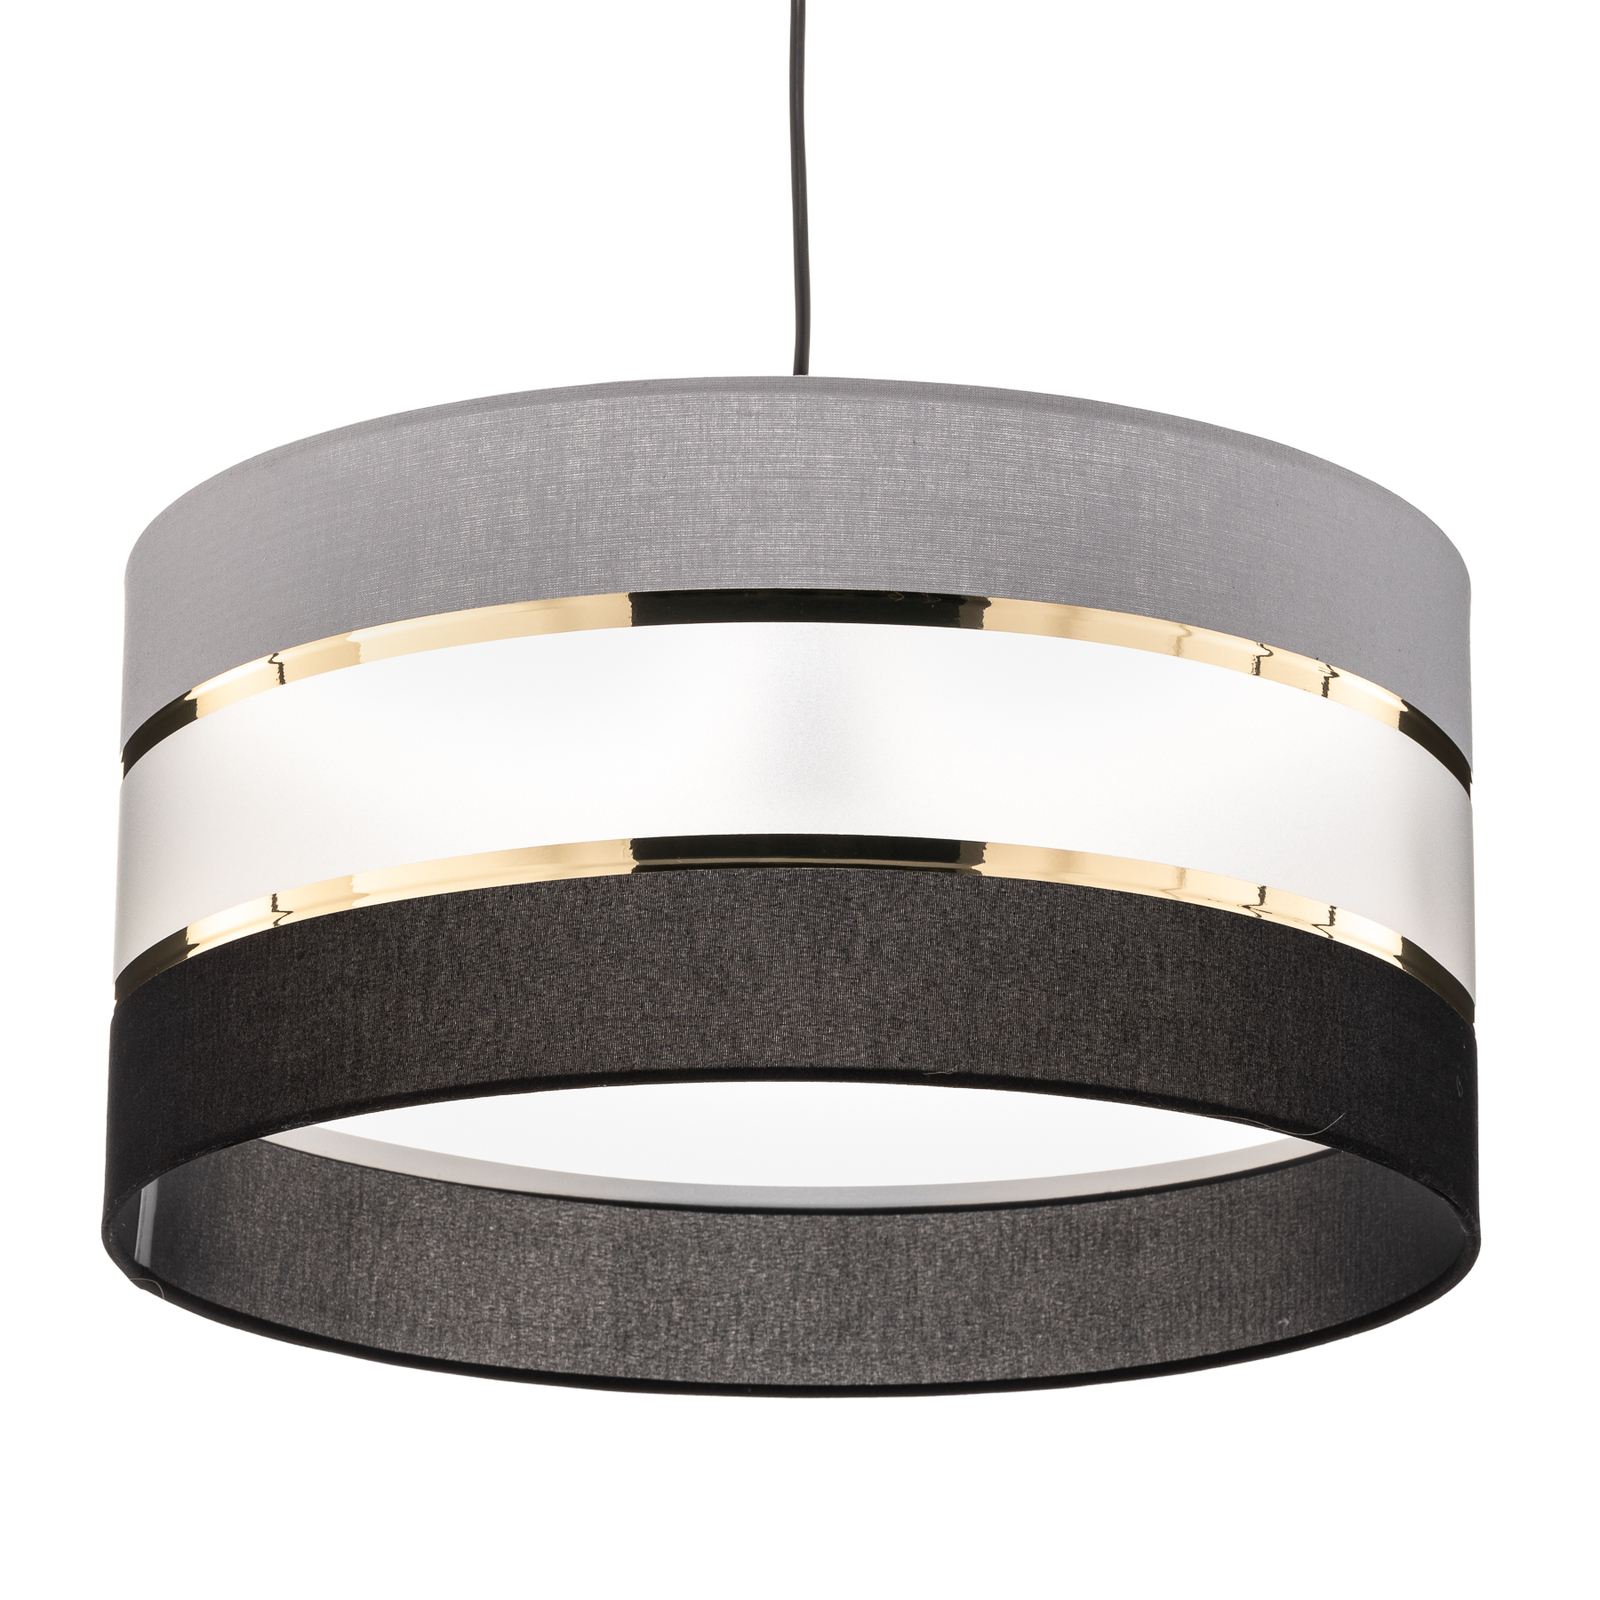 Hanglamp Helen textiel grijs-zwart-goud Ø 40 cm